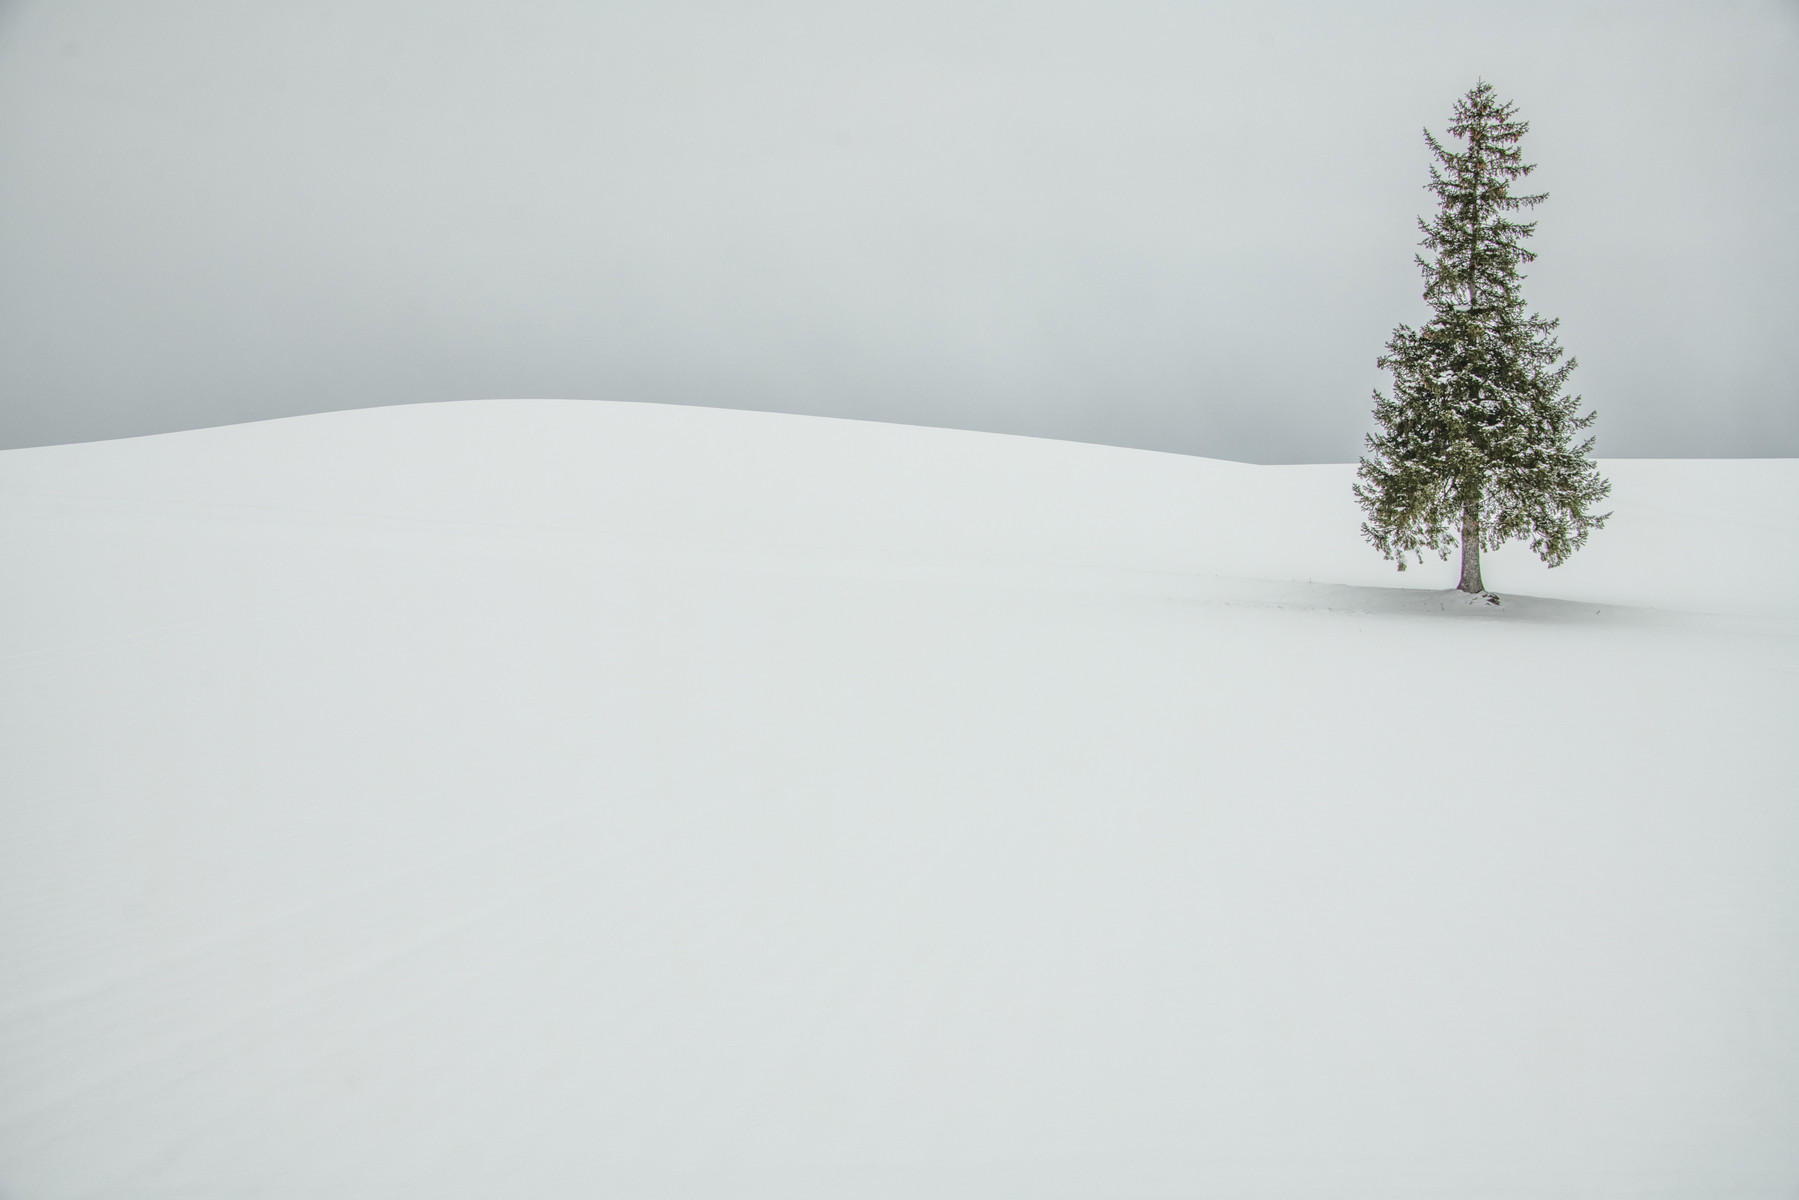 Solo Pine : Japan, Hokkaido, Silent Snow : ELIZABETH SANJUAN PHOTOGRAPHY